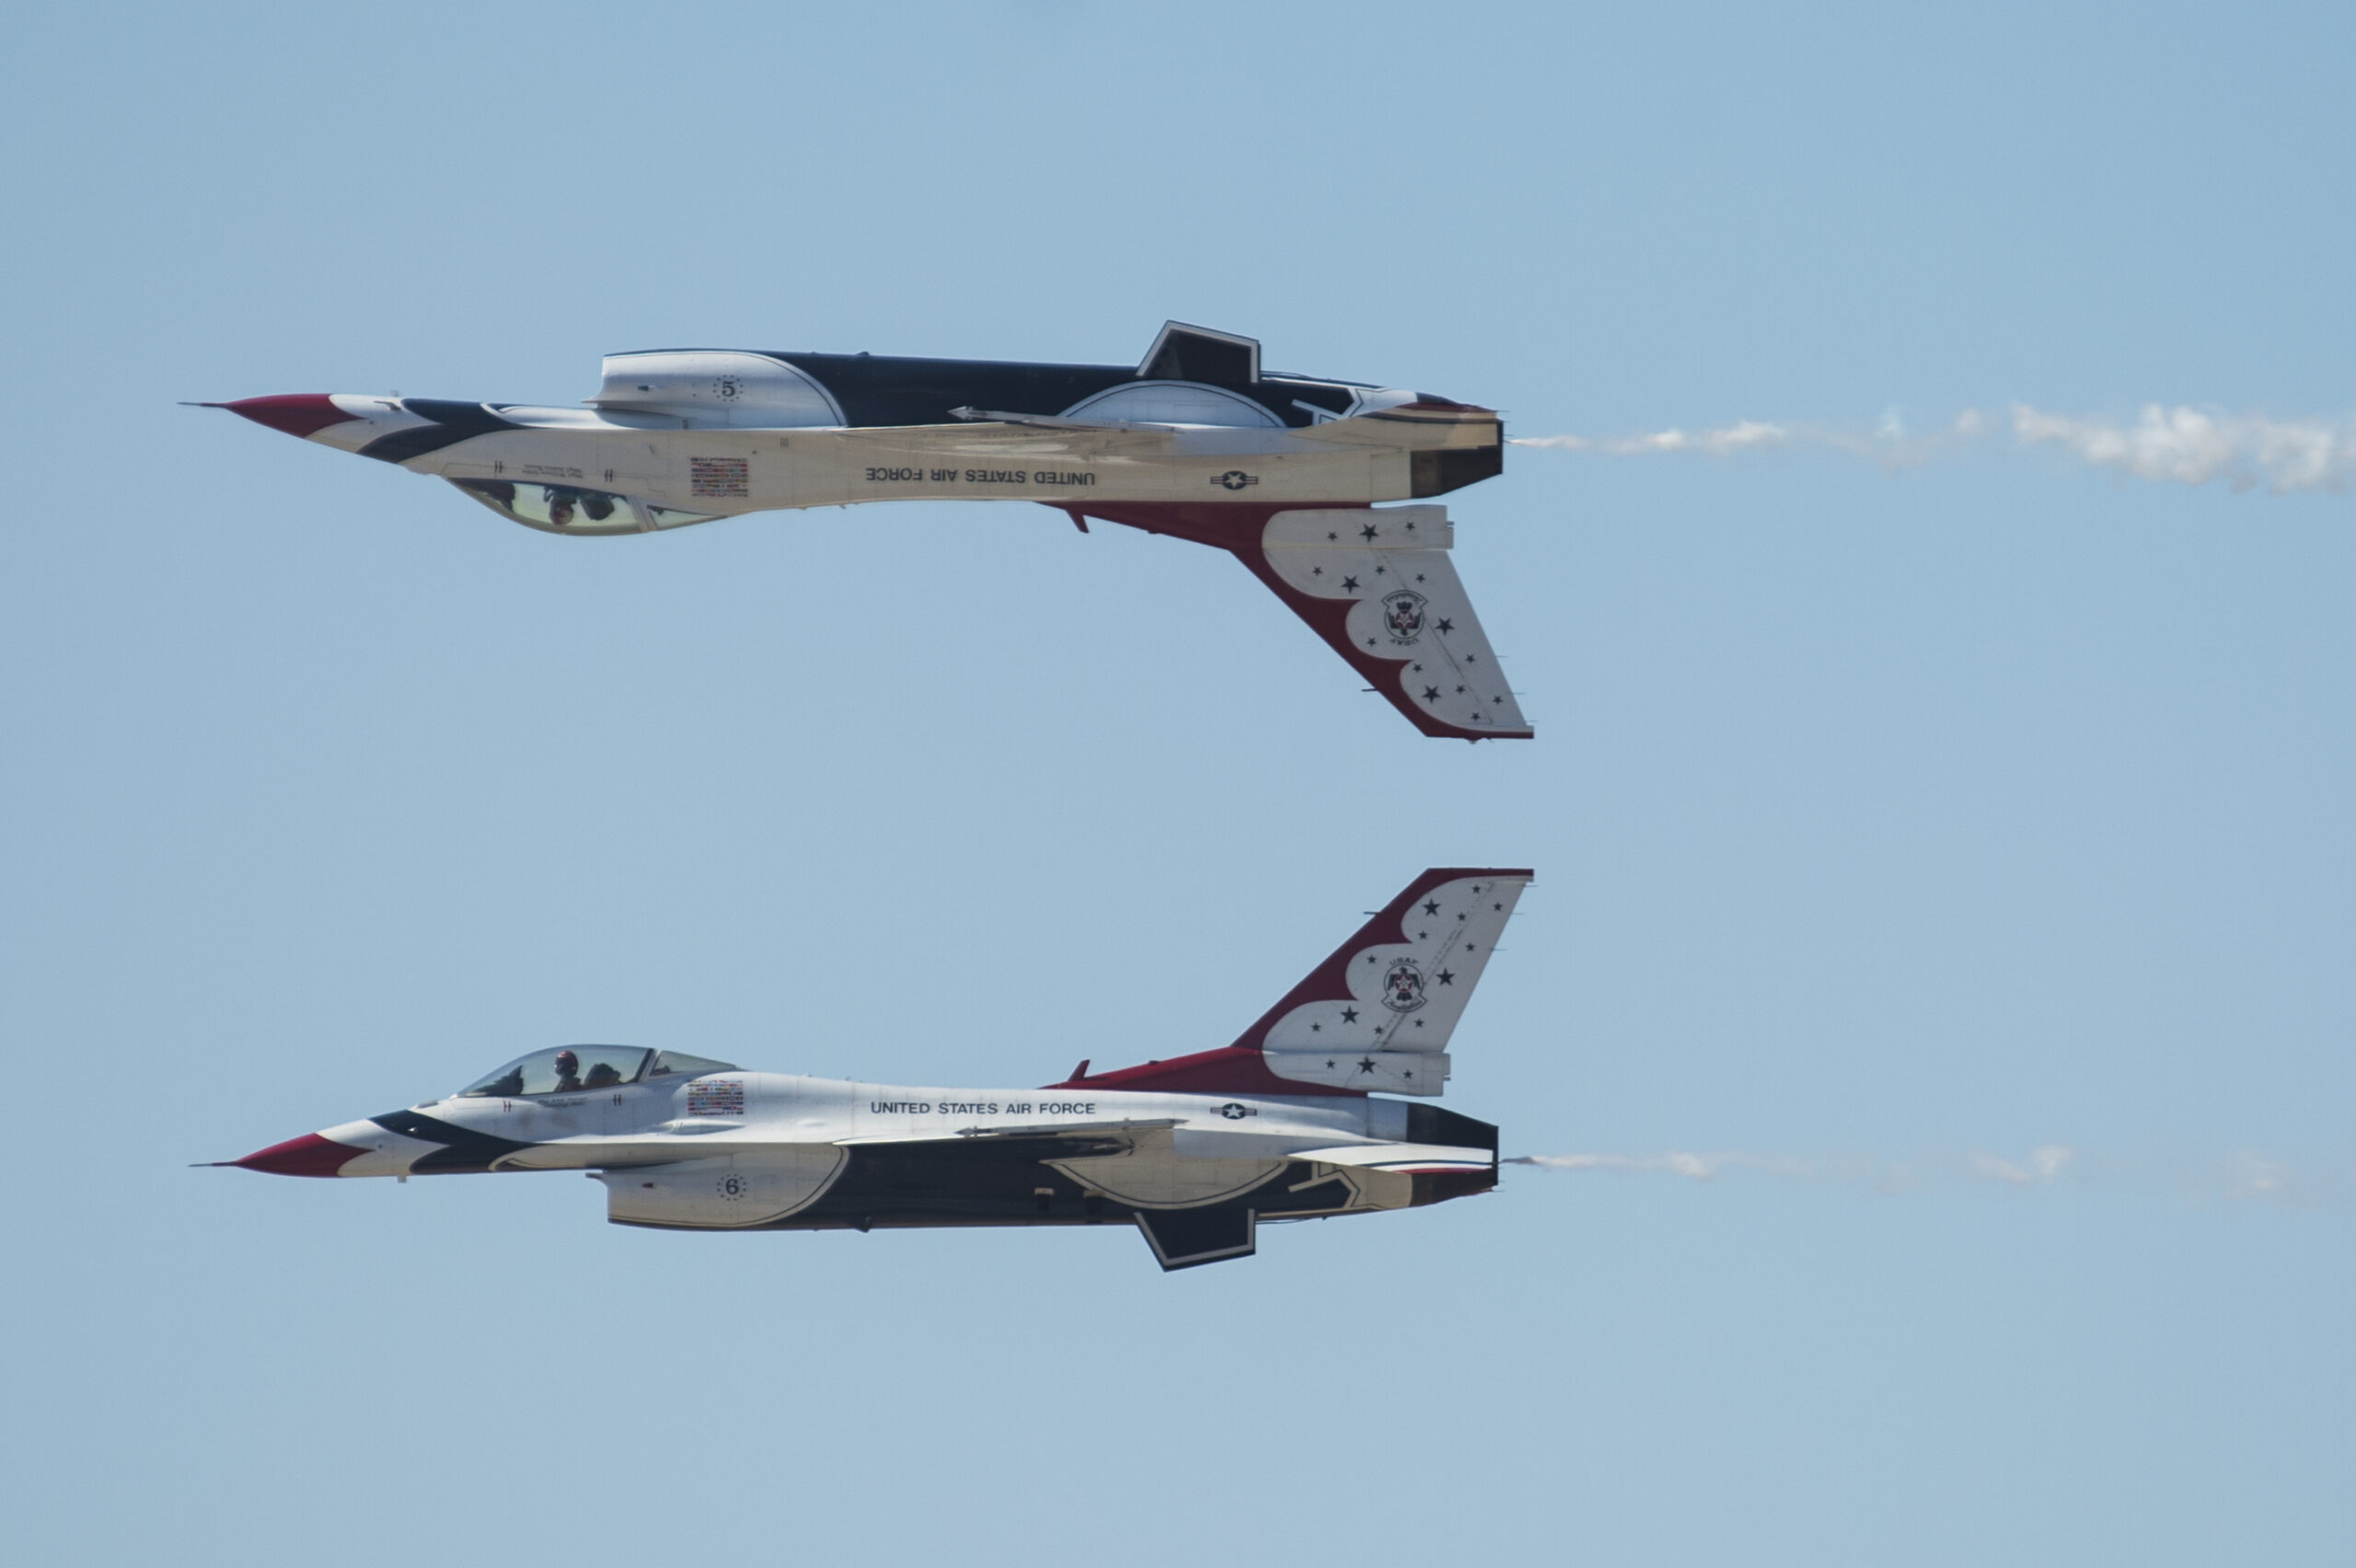 Thunderbirds at Luke Air Force Base